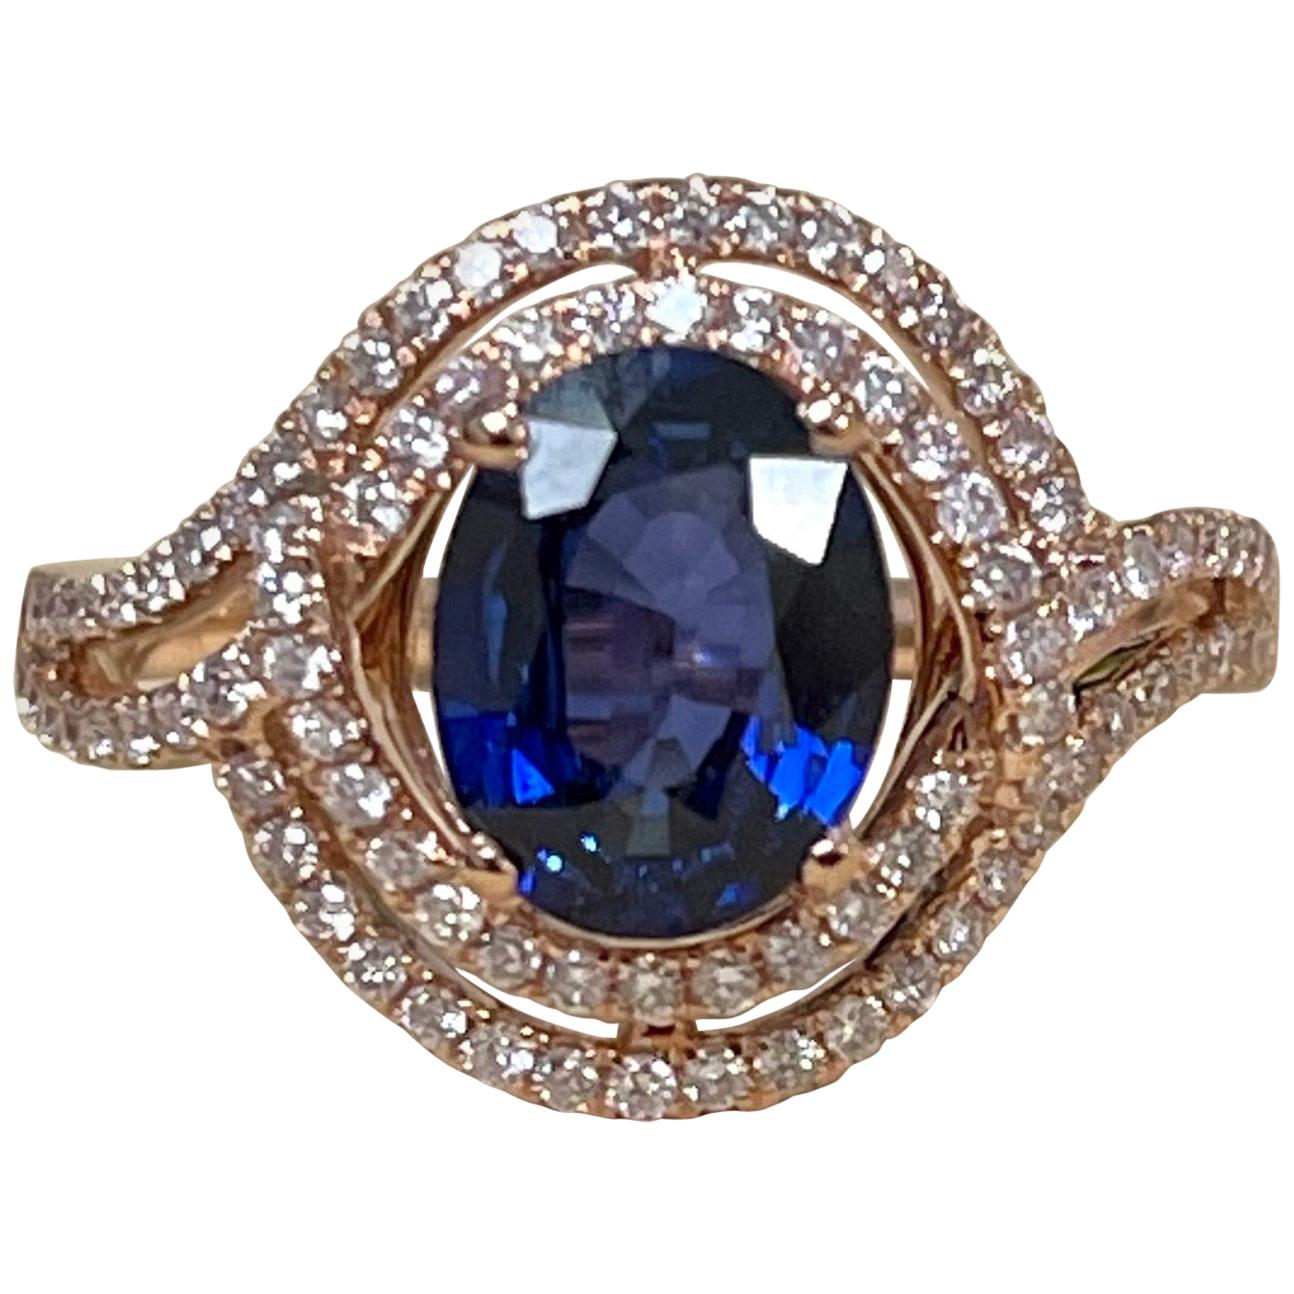 Effy's 1.9 Ct Blue Sapphire & 0.45 Carat Diamond Cocktail Ring in 14 Karat Gold